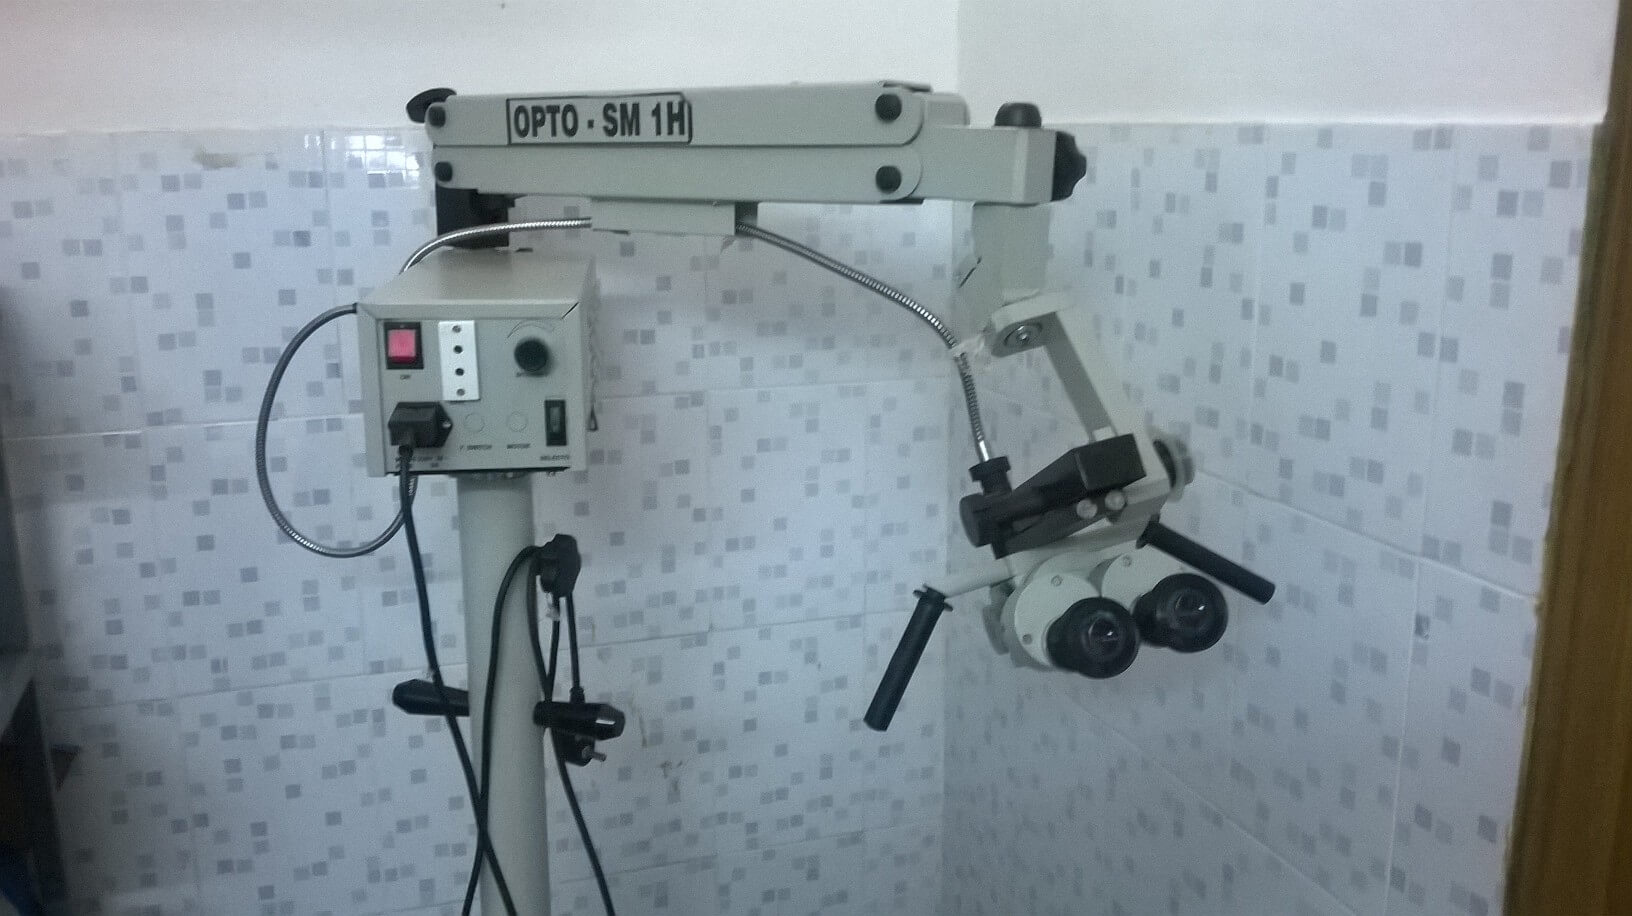 Operating Microscope